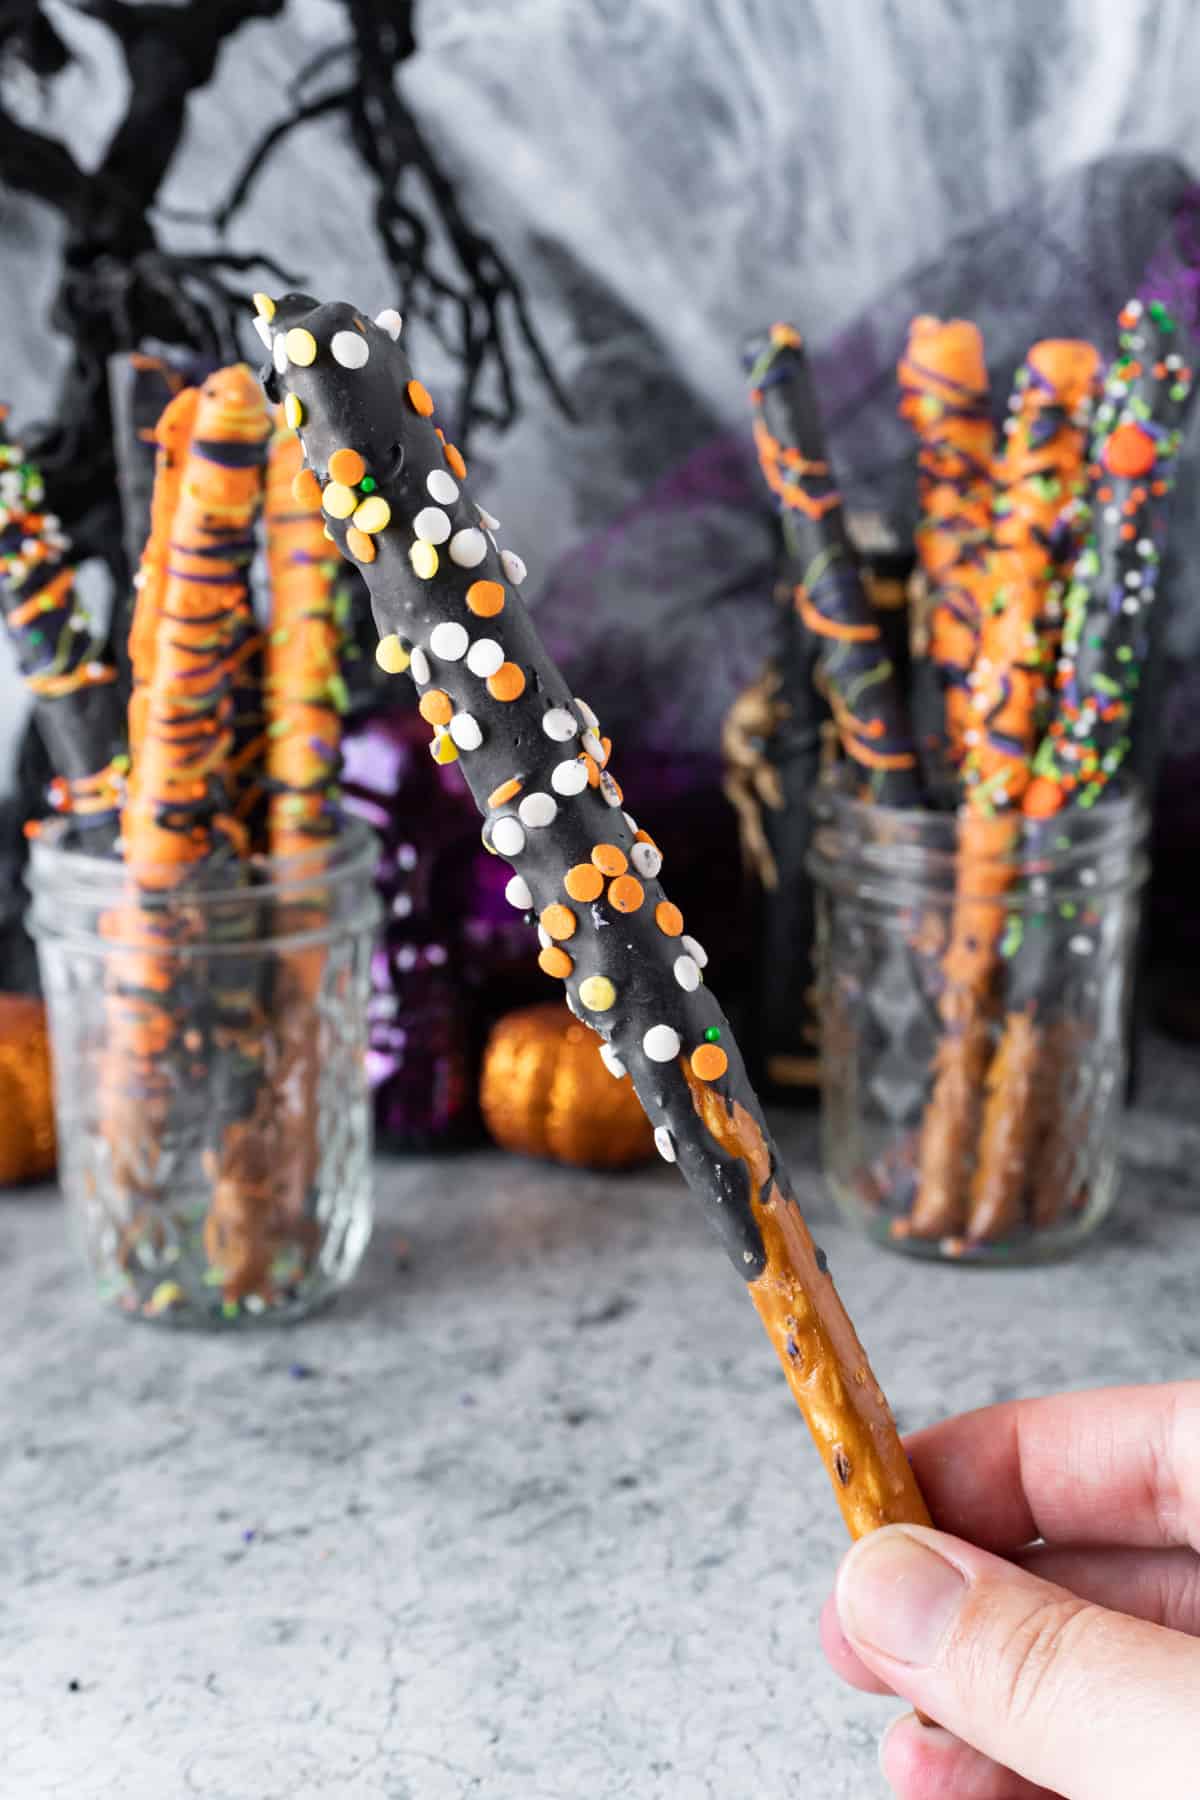 holding a decorated pretzel rod